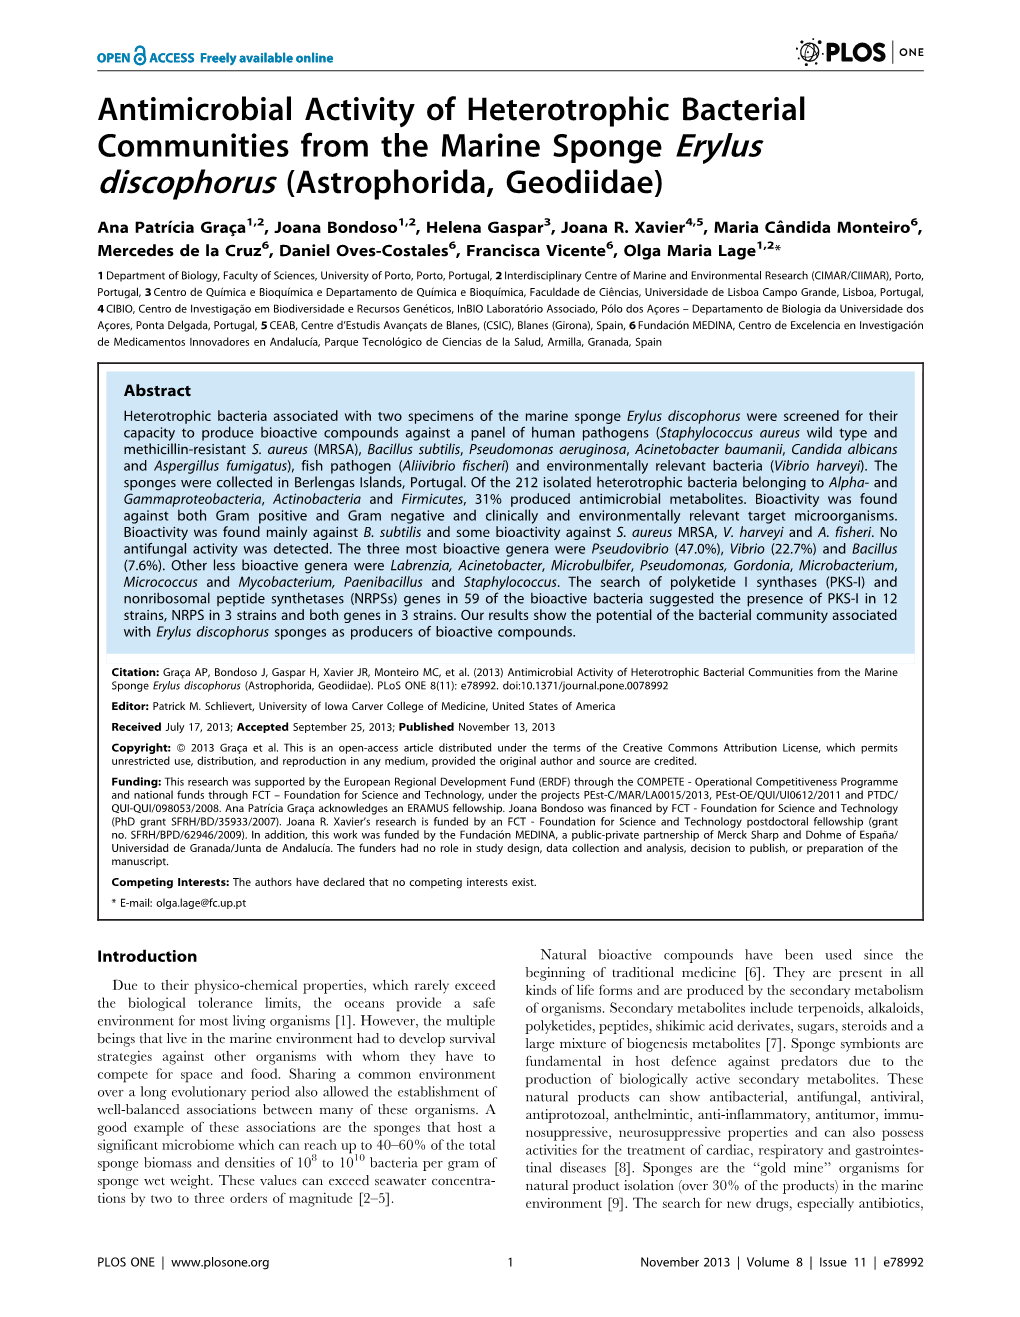 Antimicrobial Activity of Heterotrophic Bacterial Communities from the Marine Sponge Erylus Discophorus (Astrophorida, Geodiidae)